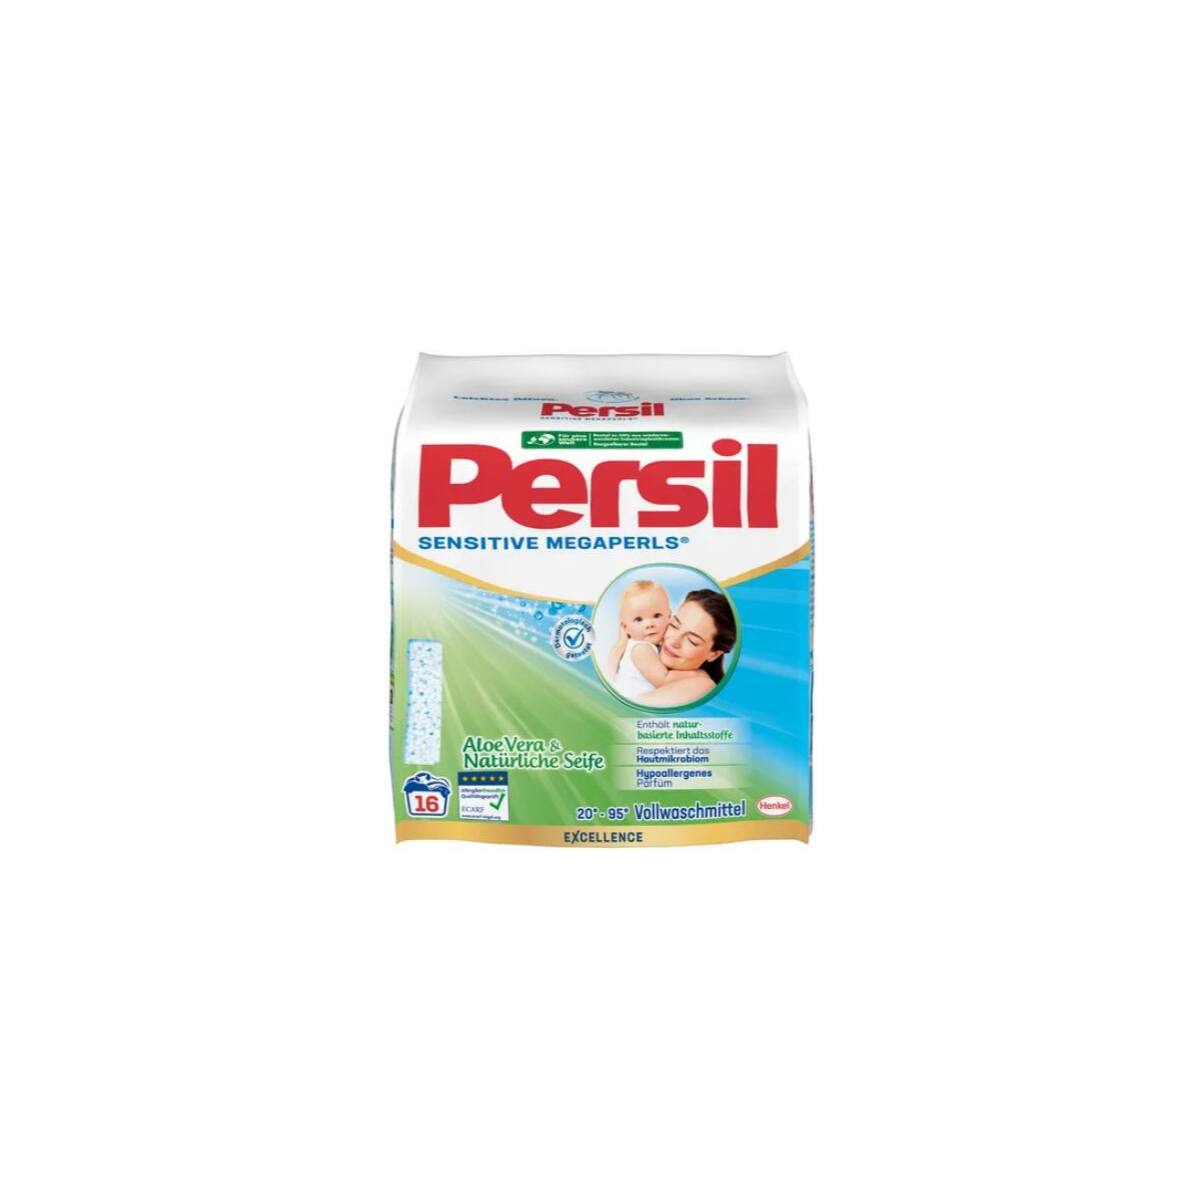 Persil Sensitive Megaperls 20 WL